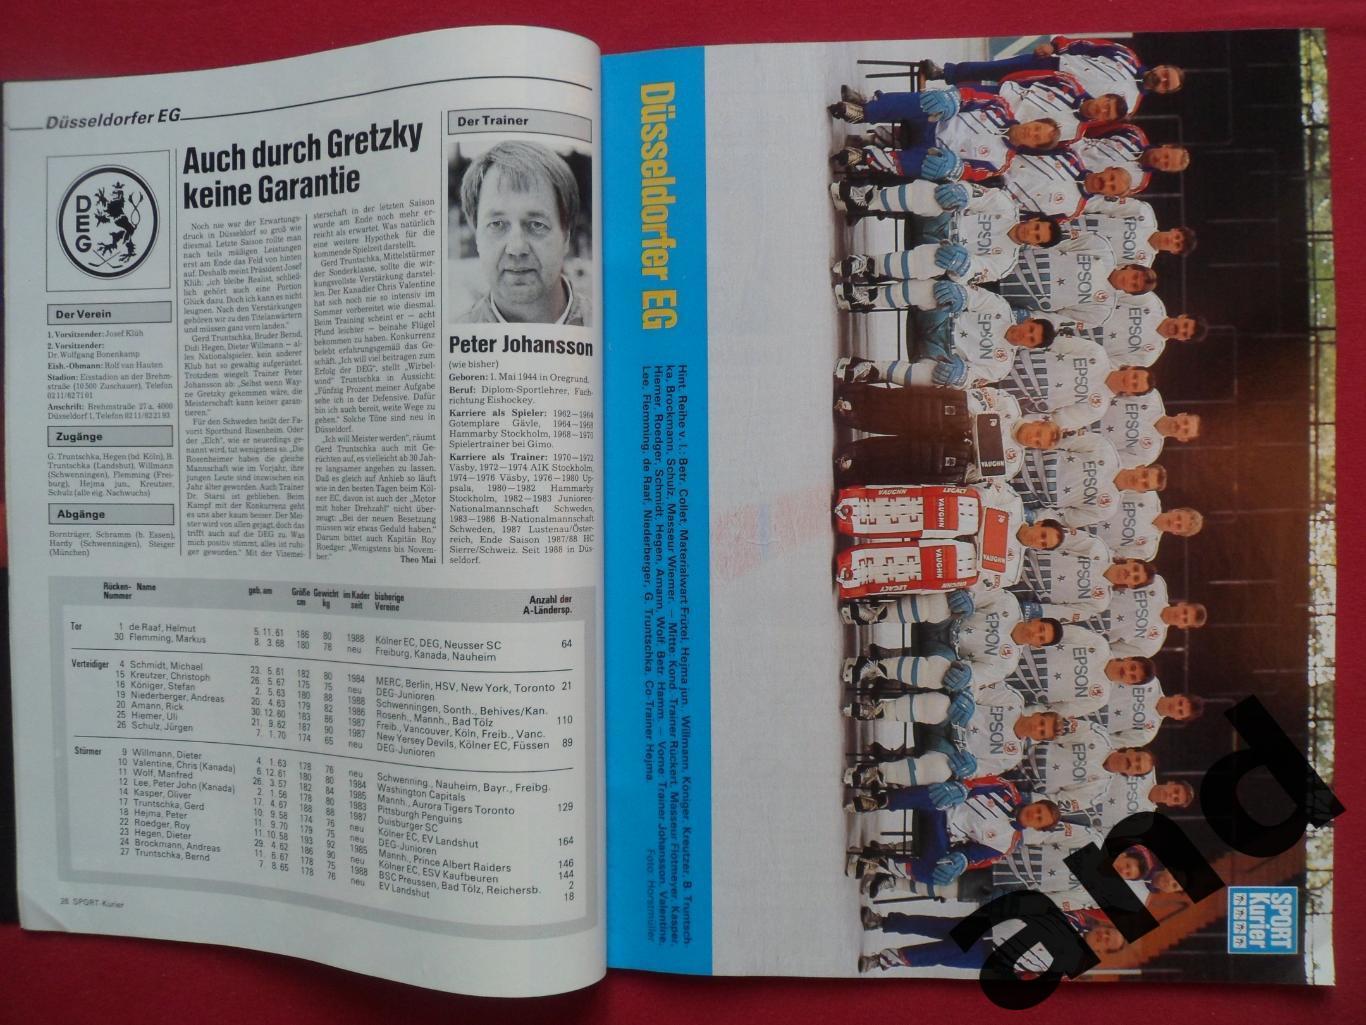 журнал Спорт Курьер ФРГ. Хоккей Бундеслига (спецвыпуск) 1989-90 (постеры команд) 2